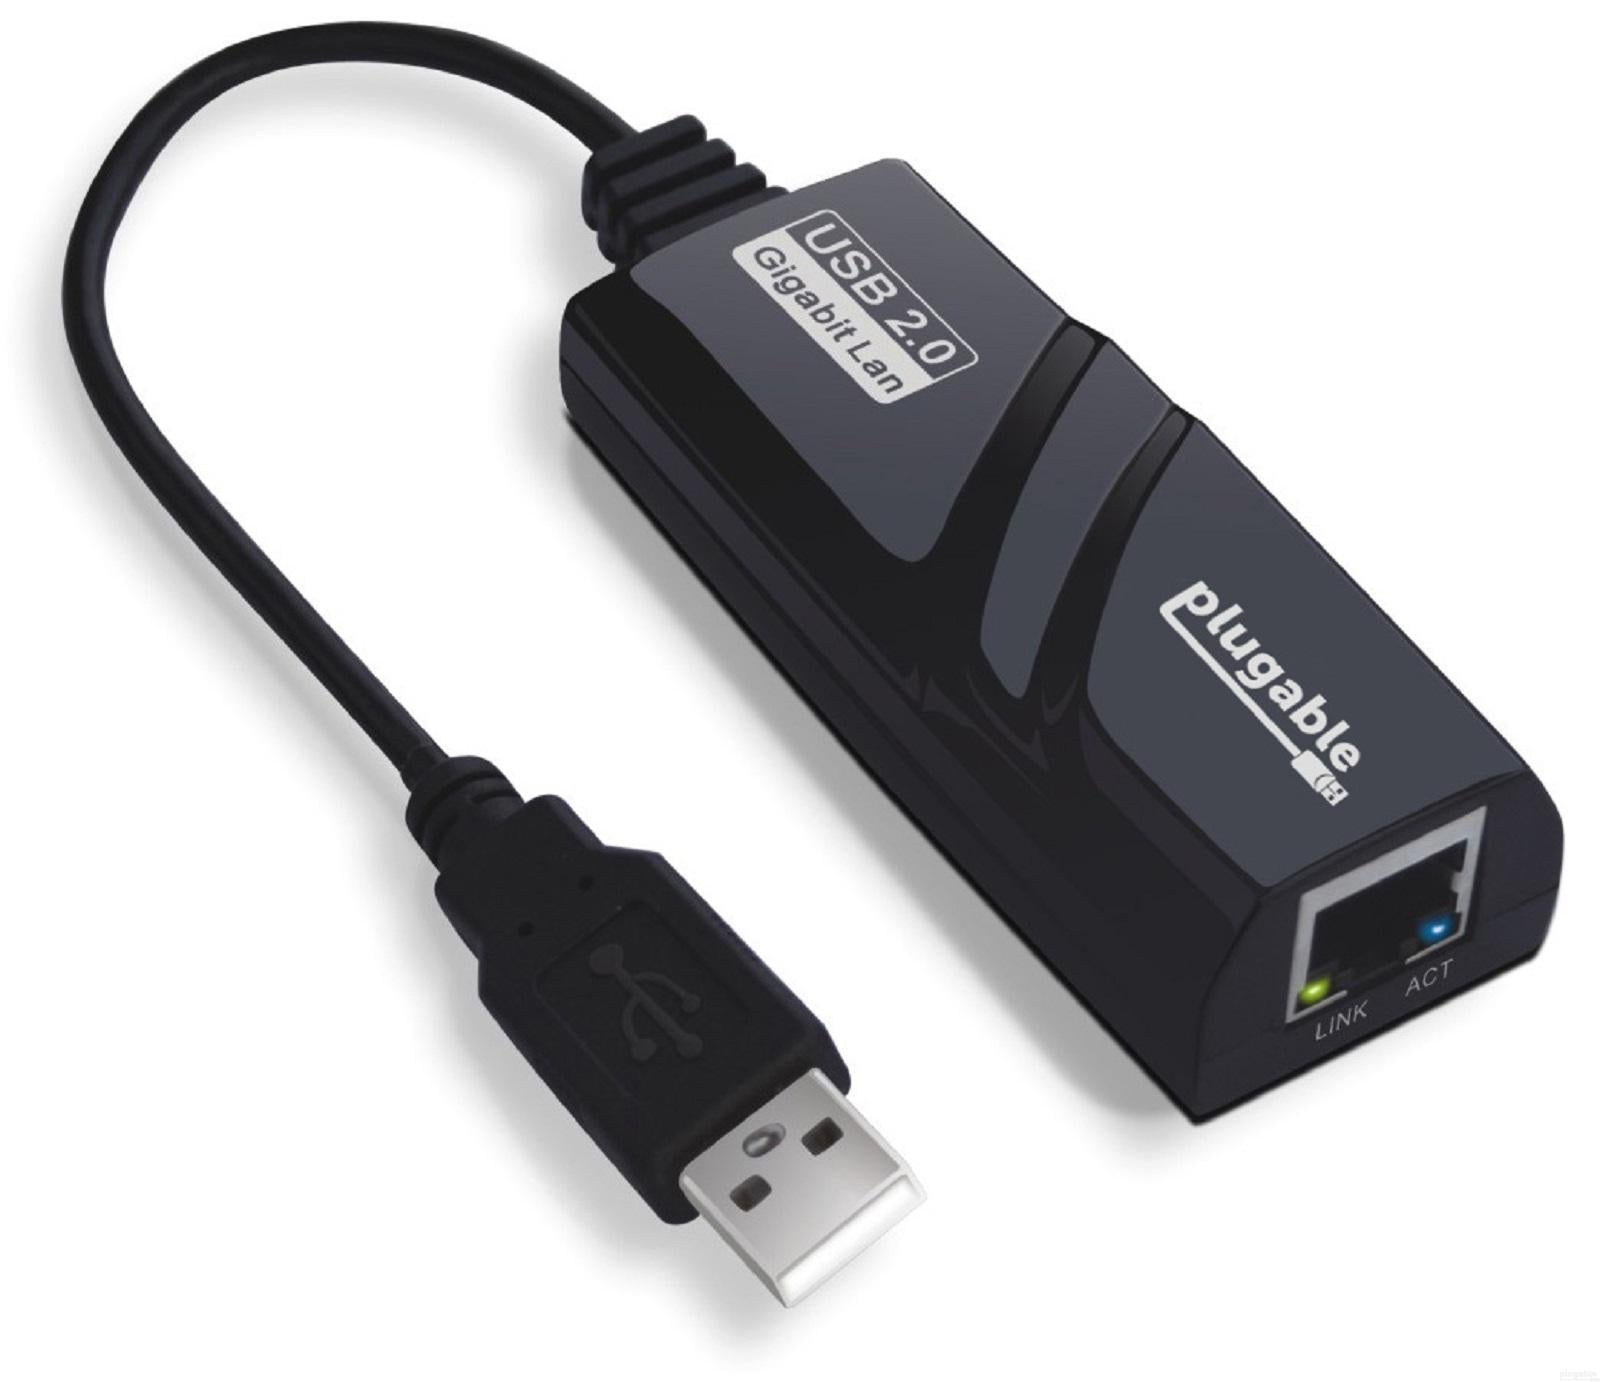 Plugable USB 2.0 10/100/1000 Gigabit Ethernet Adapter